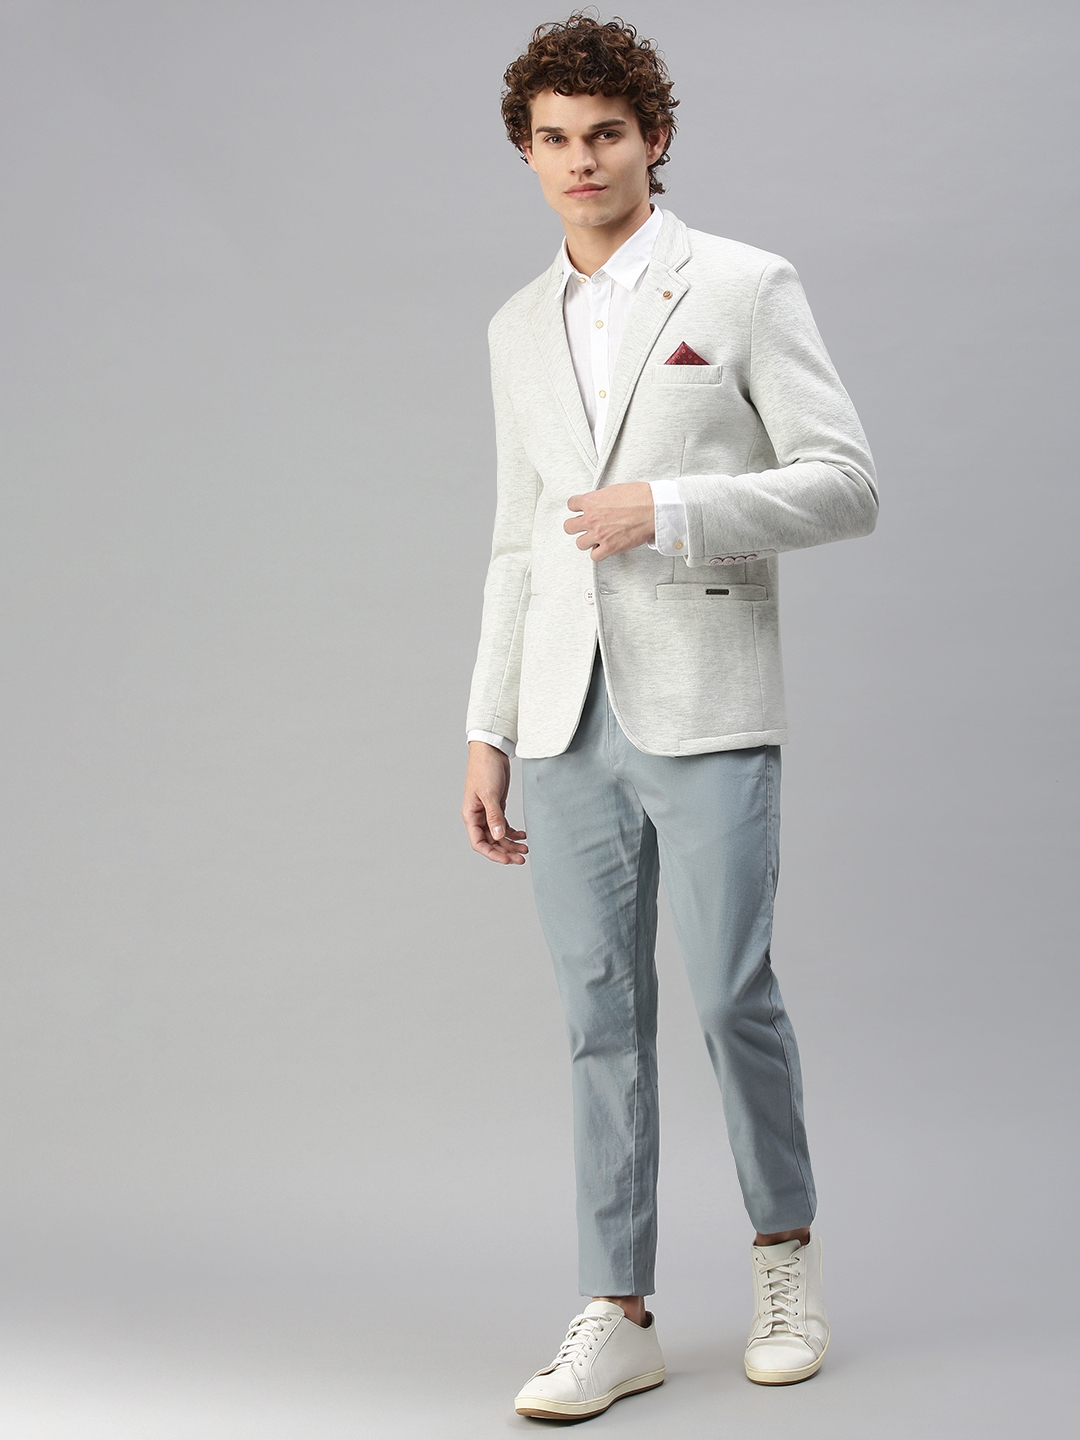 Men's White Cotton Blend Solid Blazers